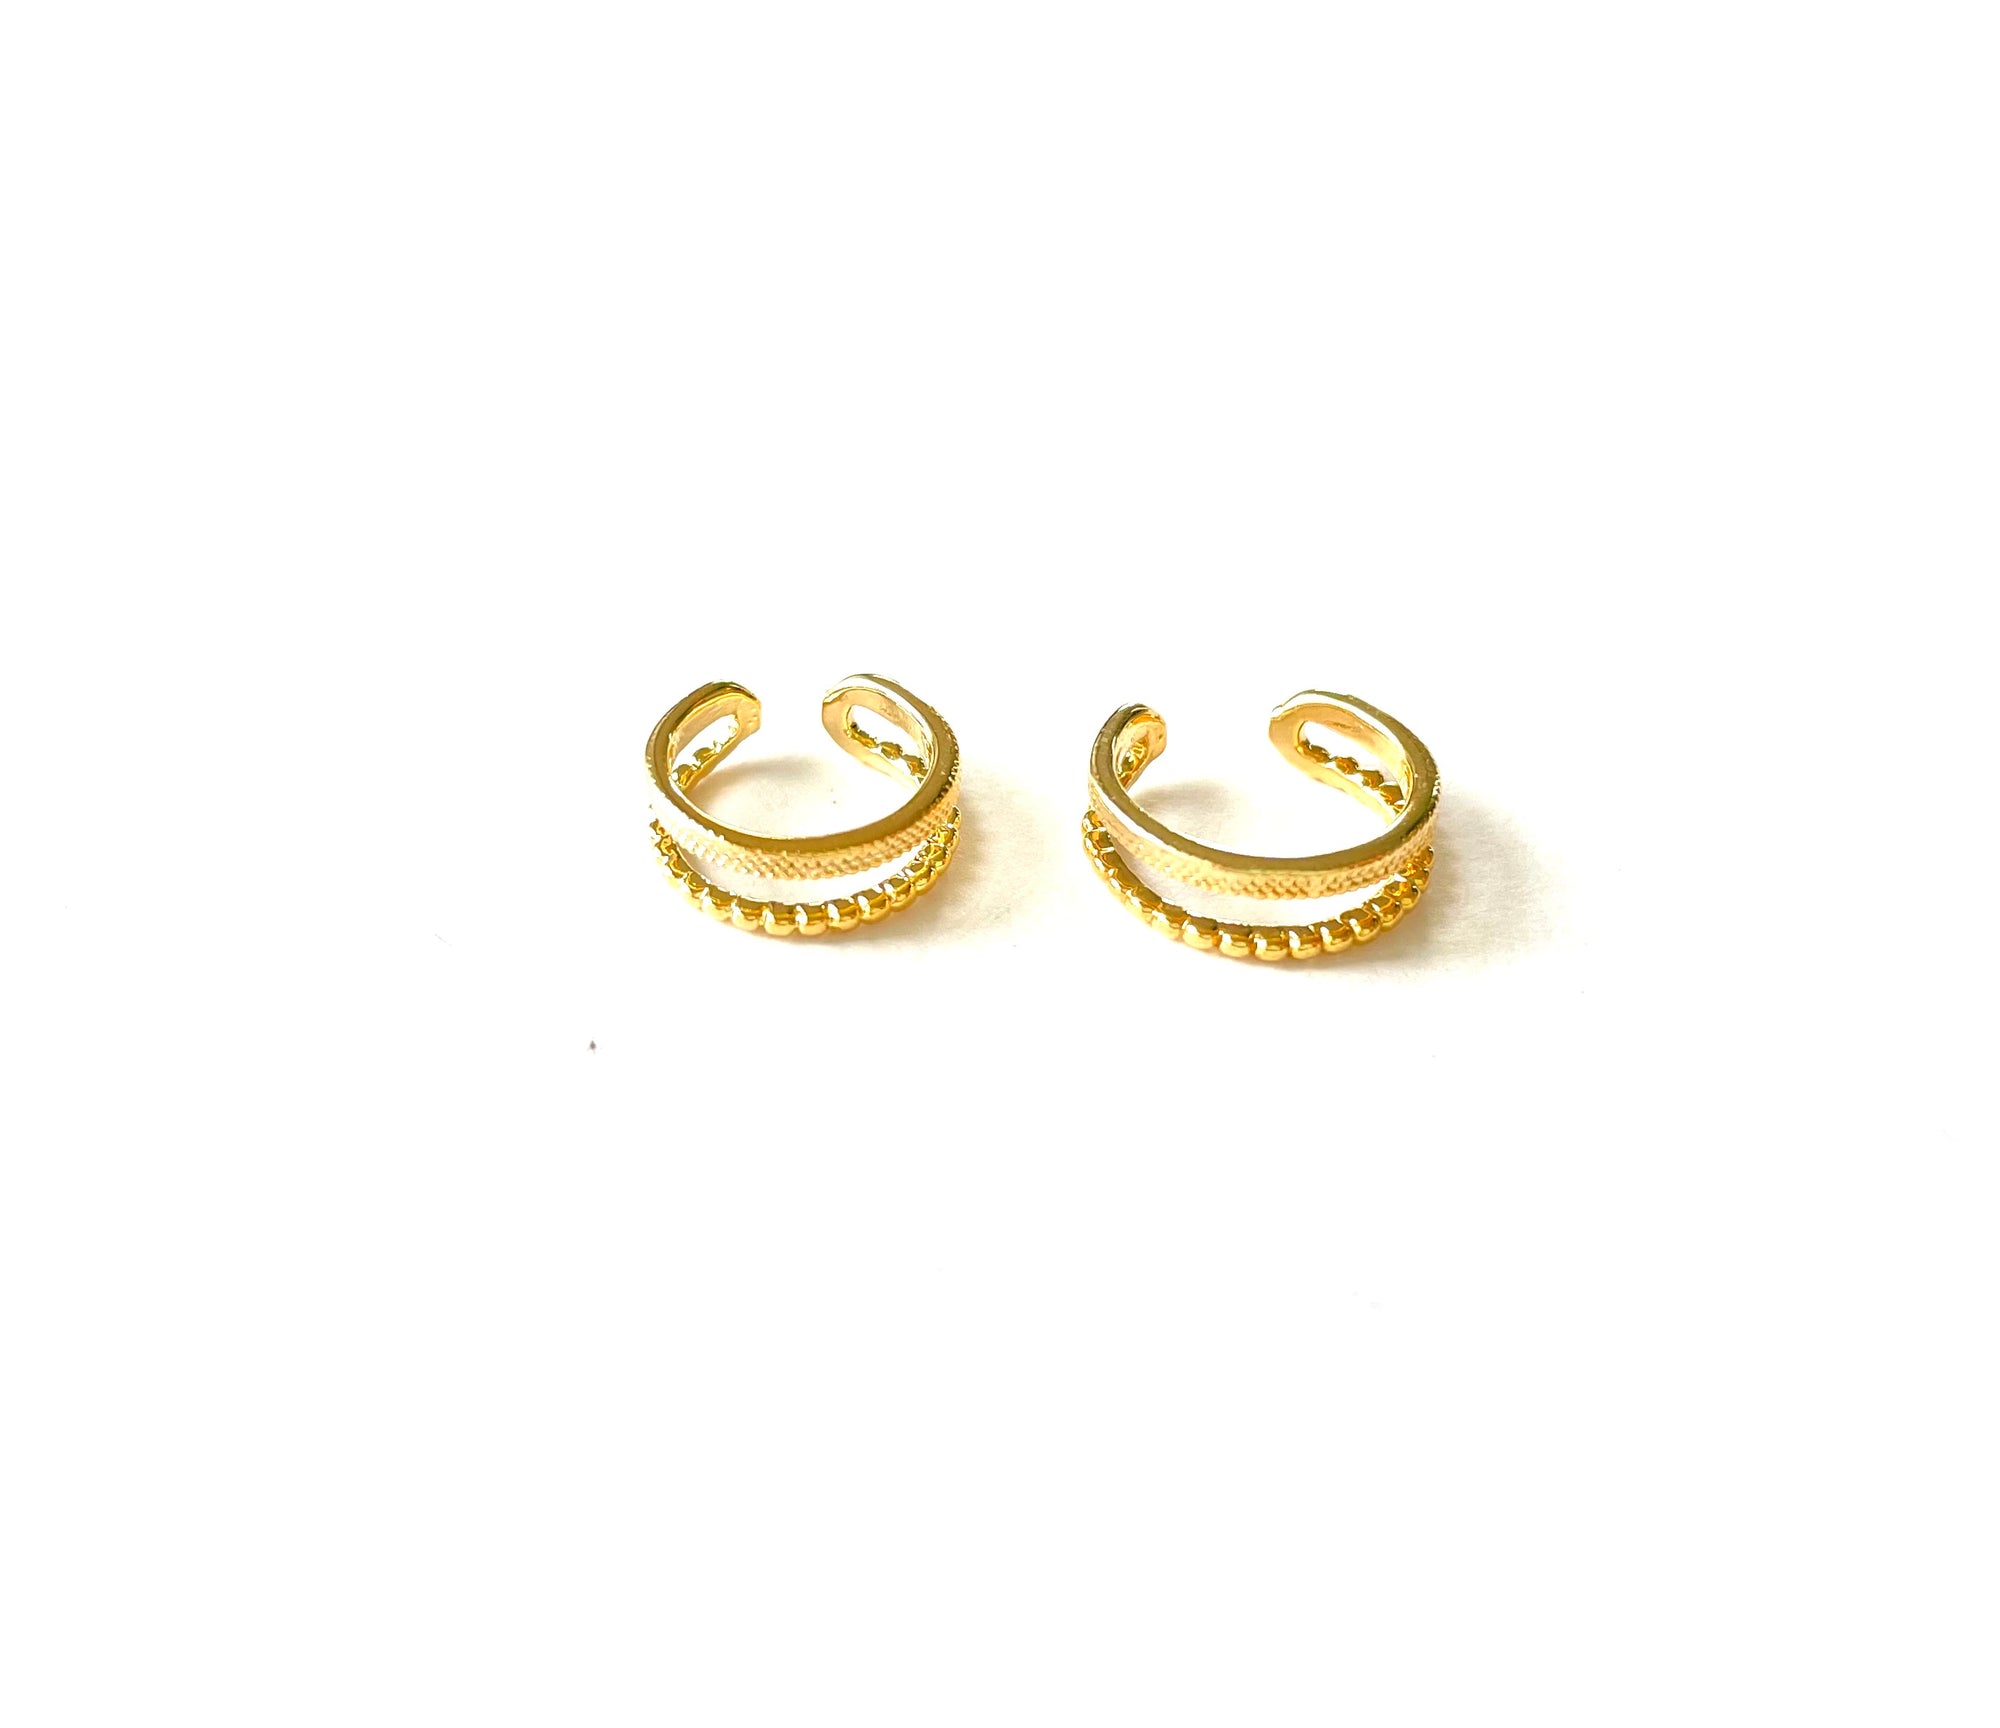 Handmade gold and brass Ear Cuff - Standout Boutique